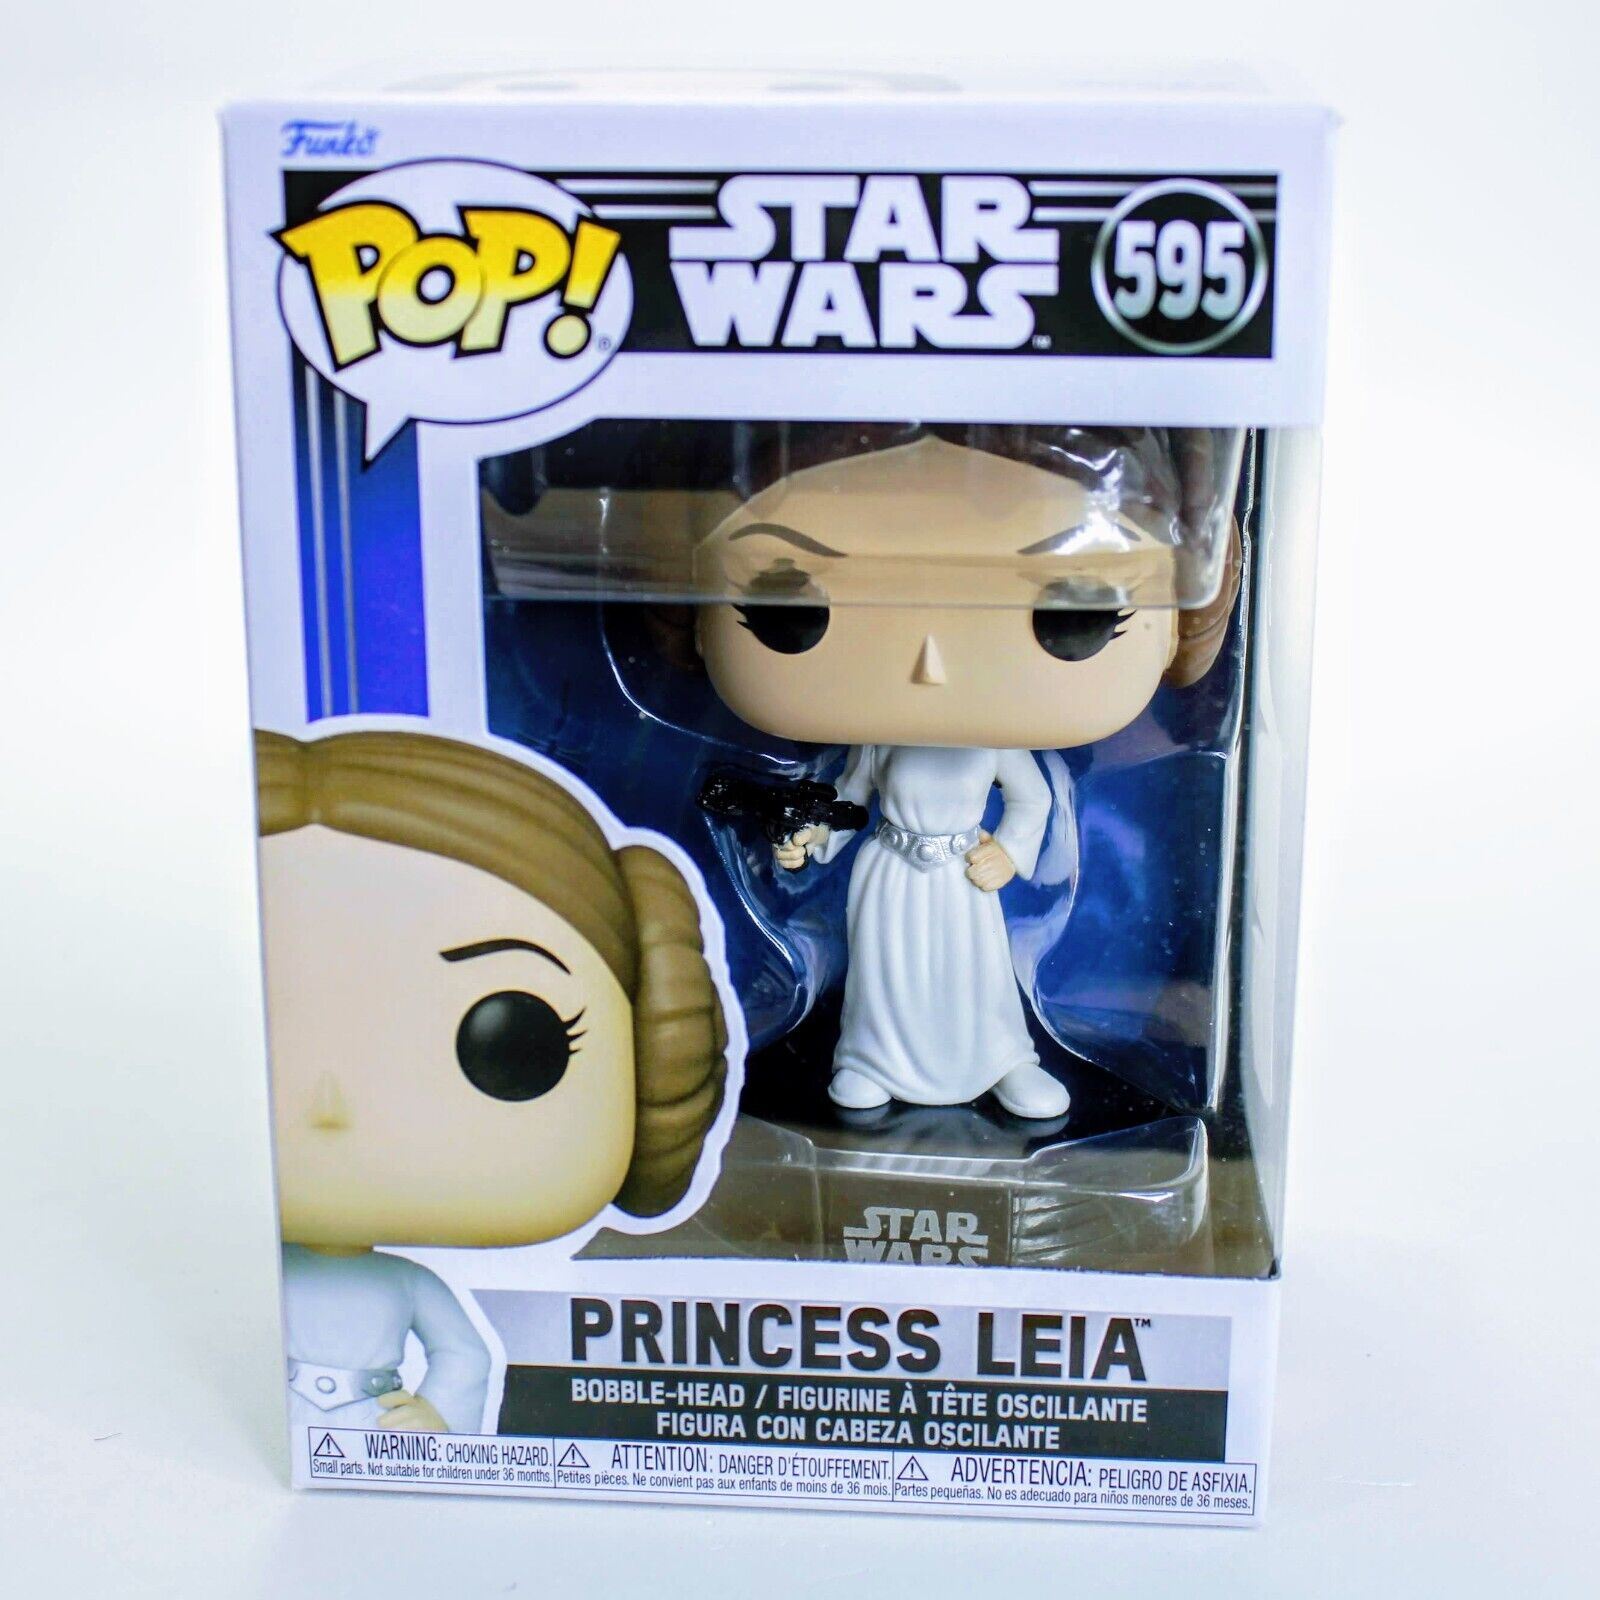 Funko Pop Star Wars A Hope Classics Princess Leia Episode IV Figure # 595